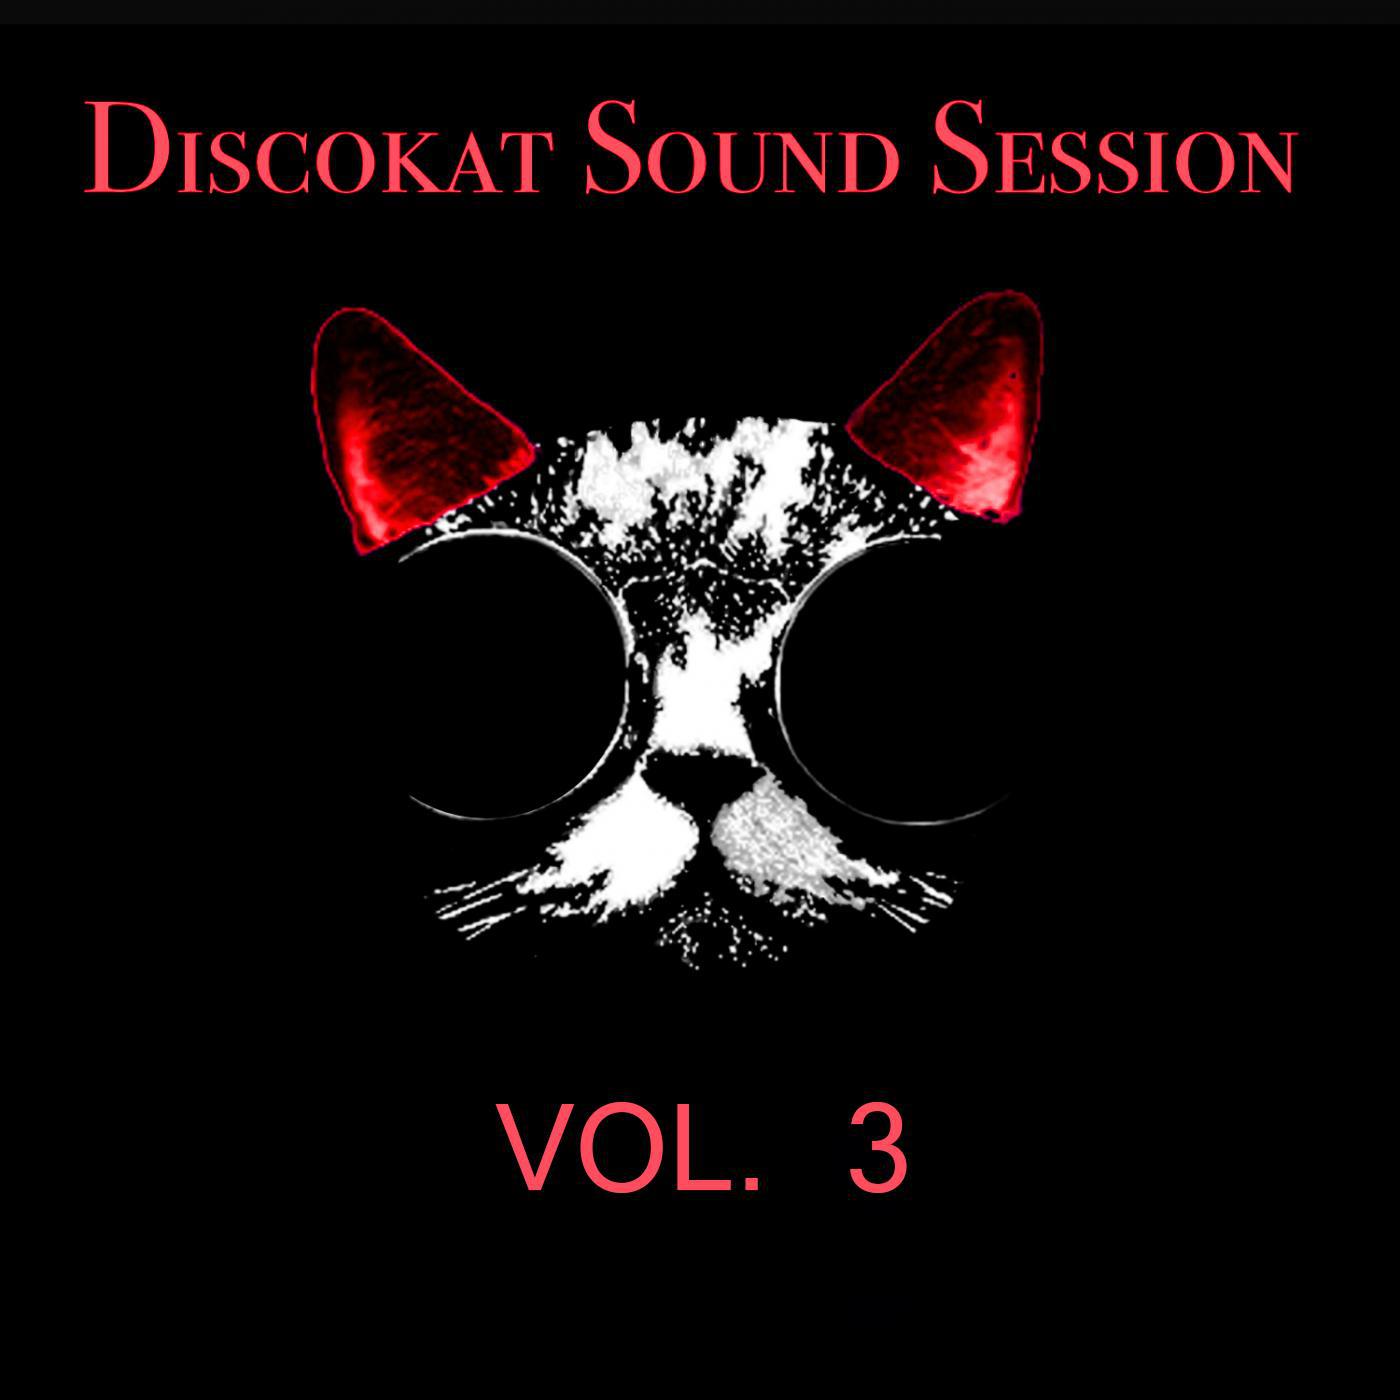 Discokat Sound Session Vol. 3